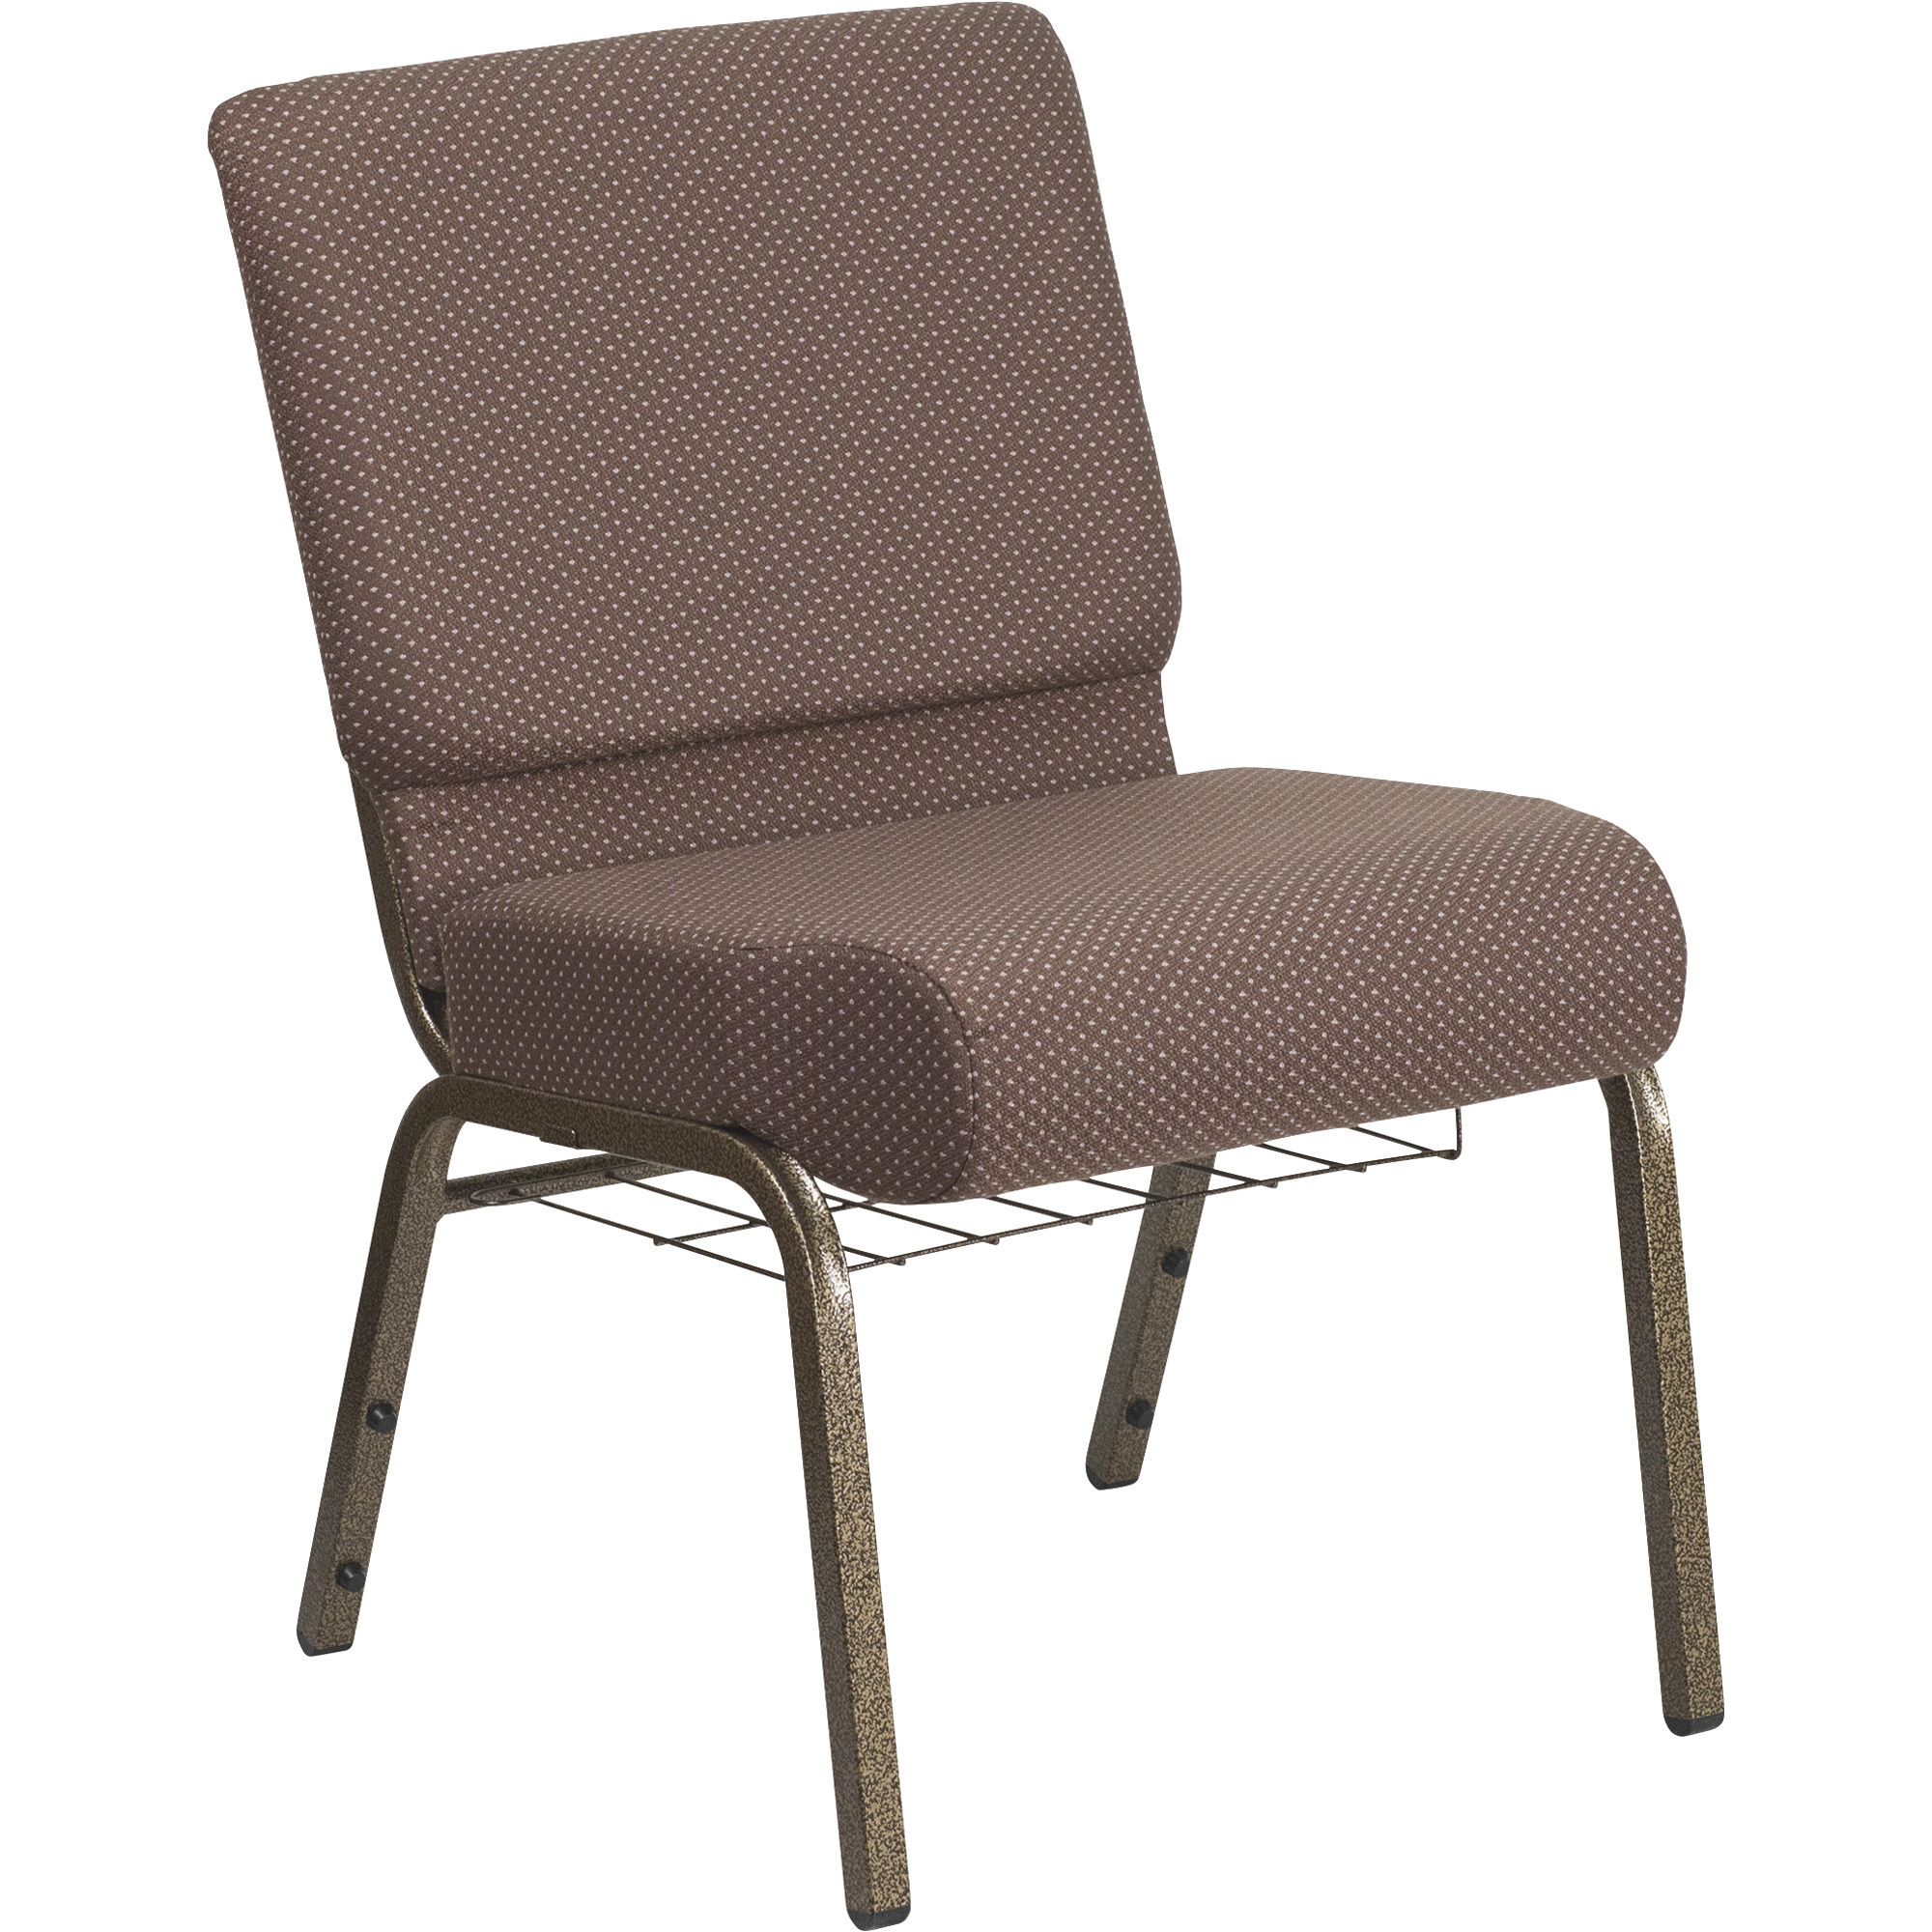 Flash Furniture Fabric Church Chair with Book Rack â Brown Dot/Gold Vein Frame, 21 1/4Inch W x 25Inch D x 33Inch H, Model FCH2214GVBNDTB